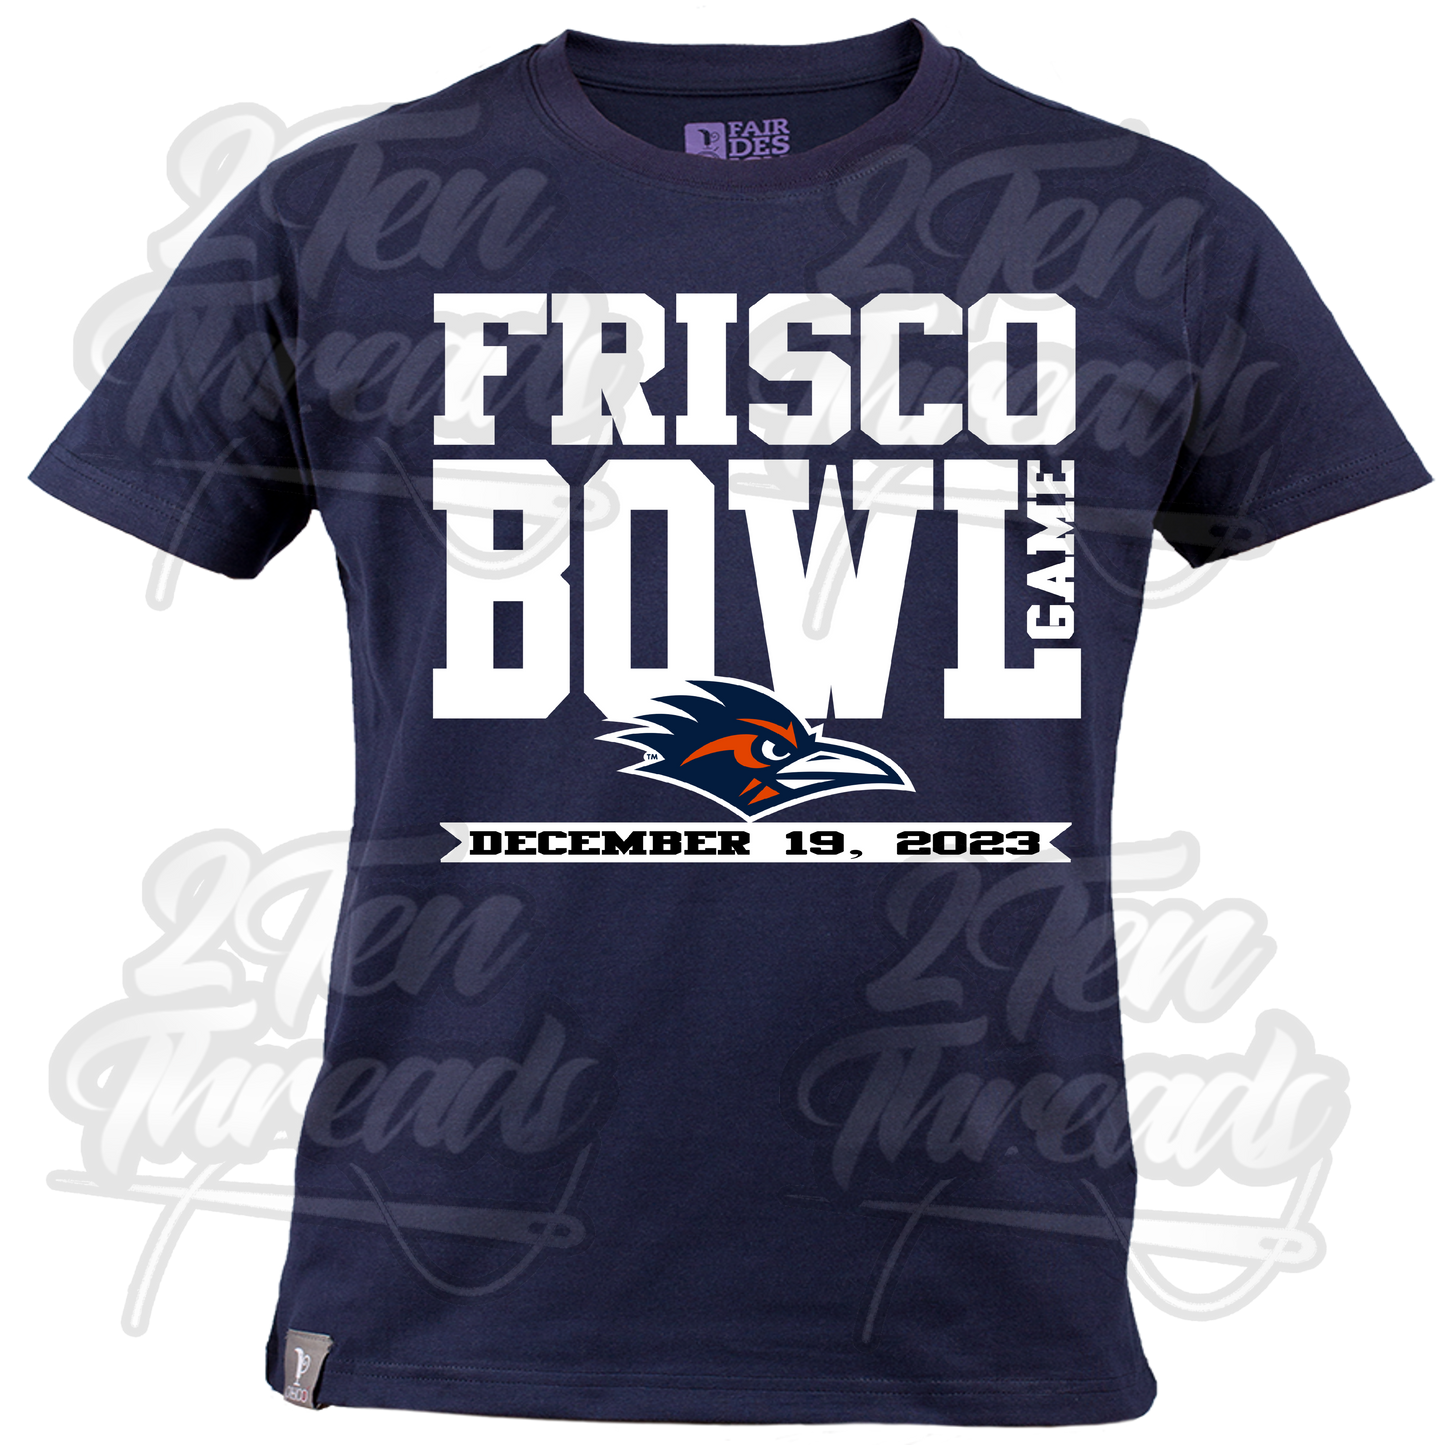 UTSA Frisco Game Shirt